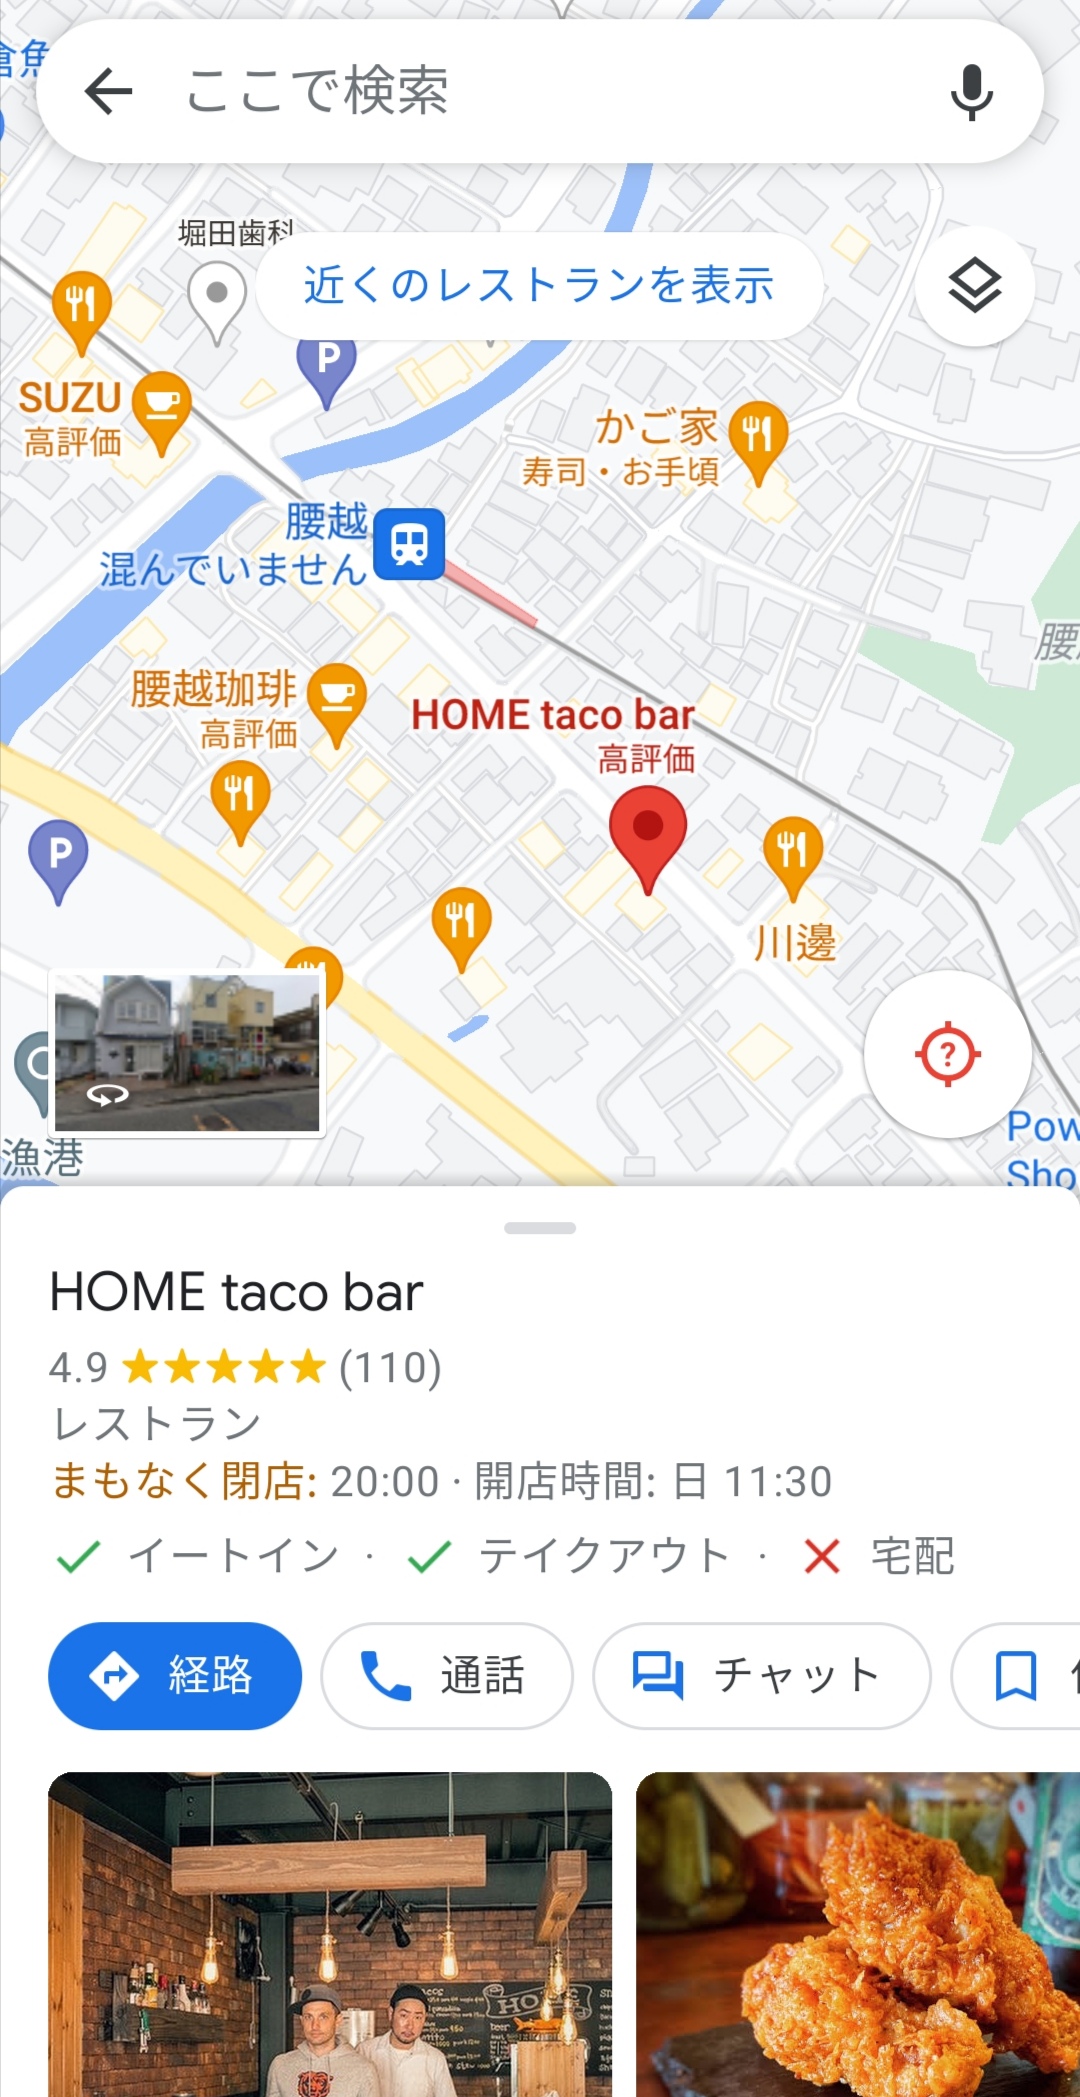 Home taco bar